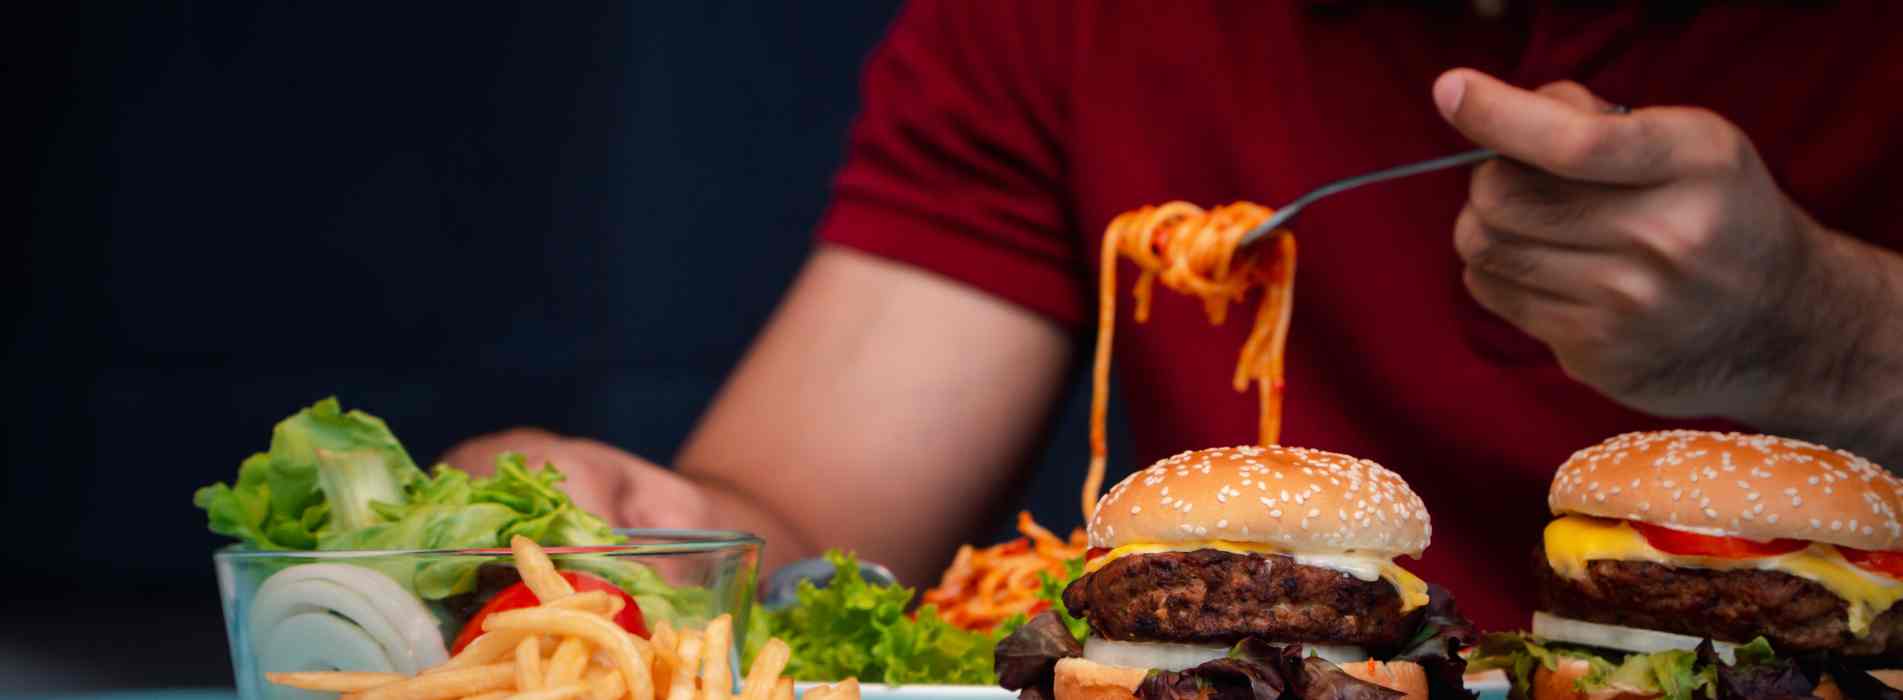 How binge eating affects obesity